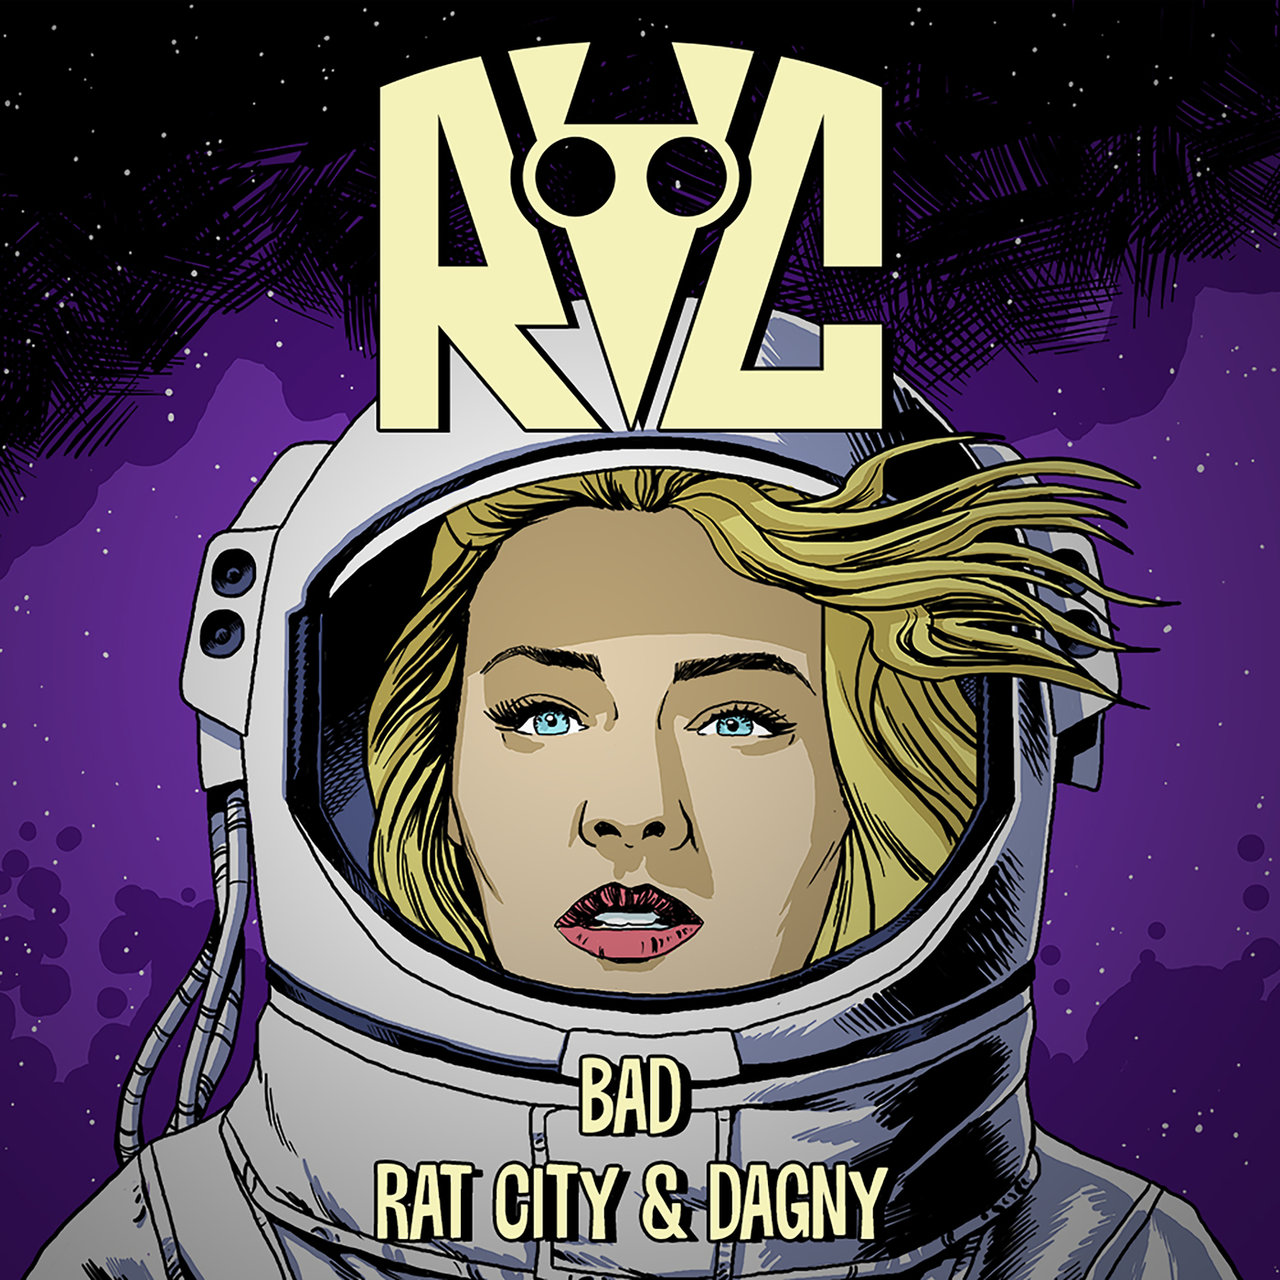 Rat City & Dagny — BAD cover artwork